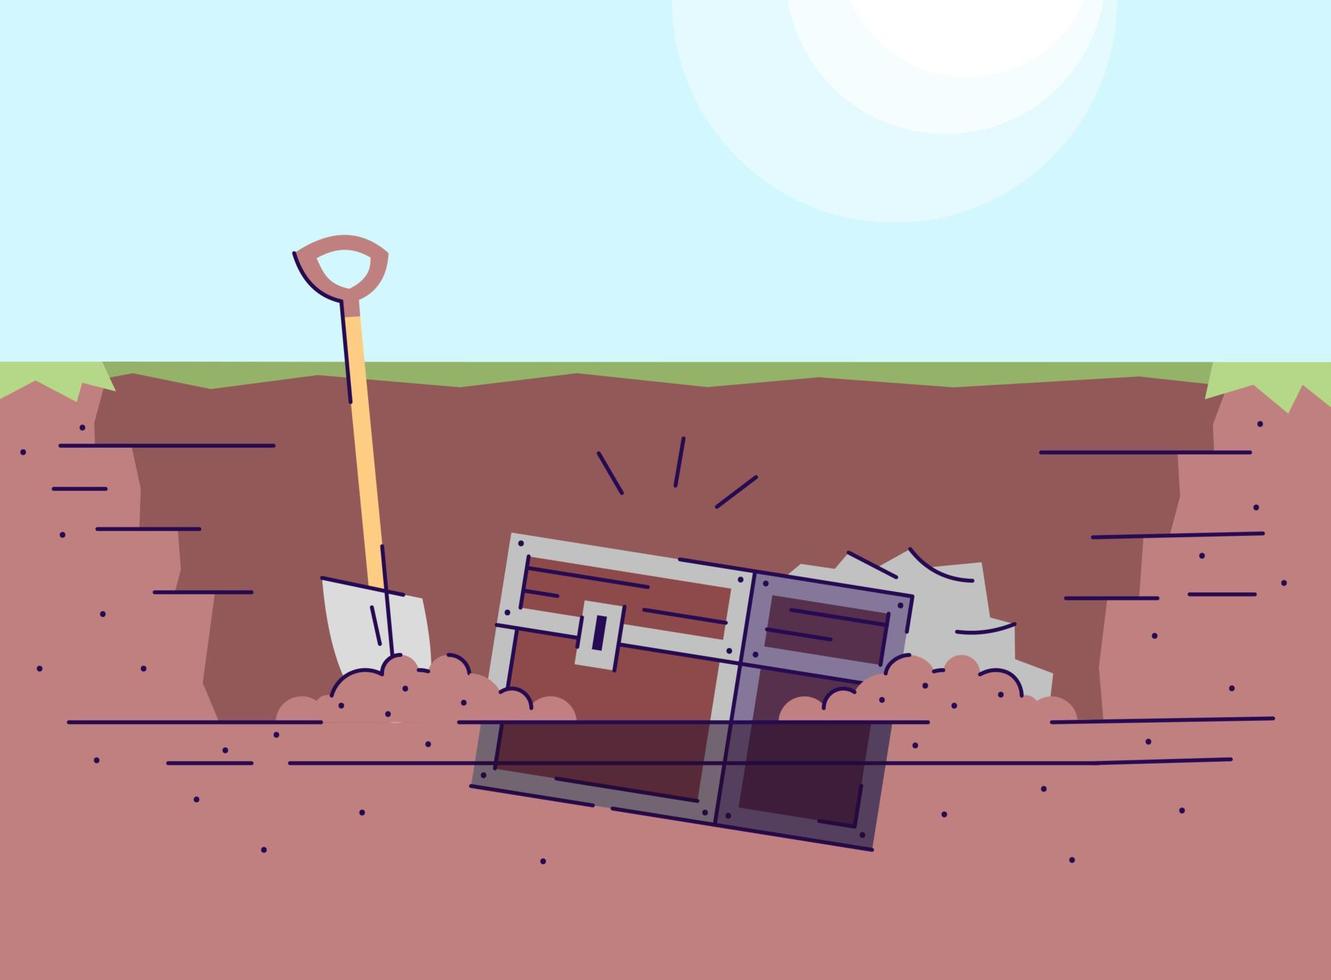 Digging up treasure chest flat vector illustration